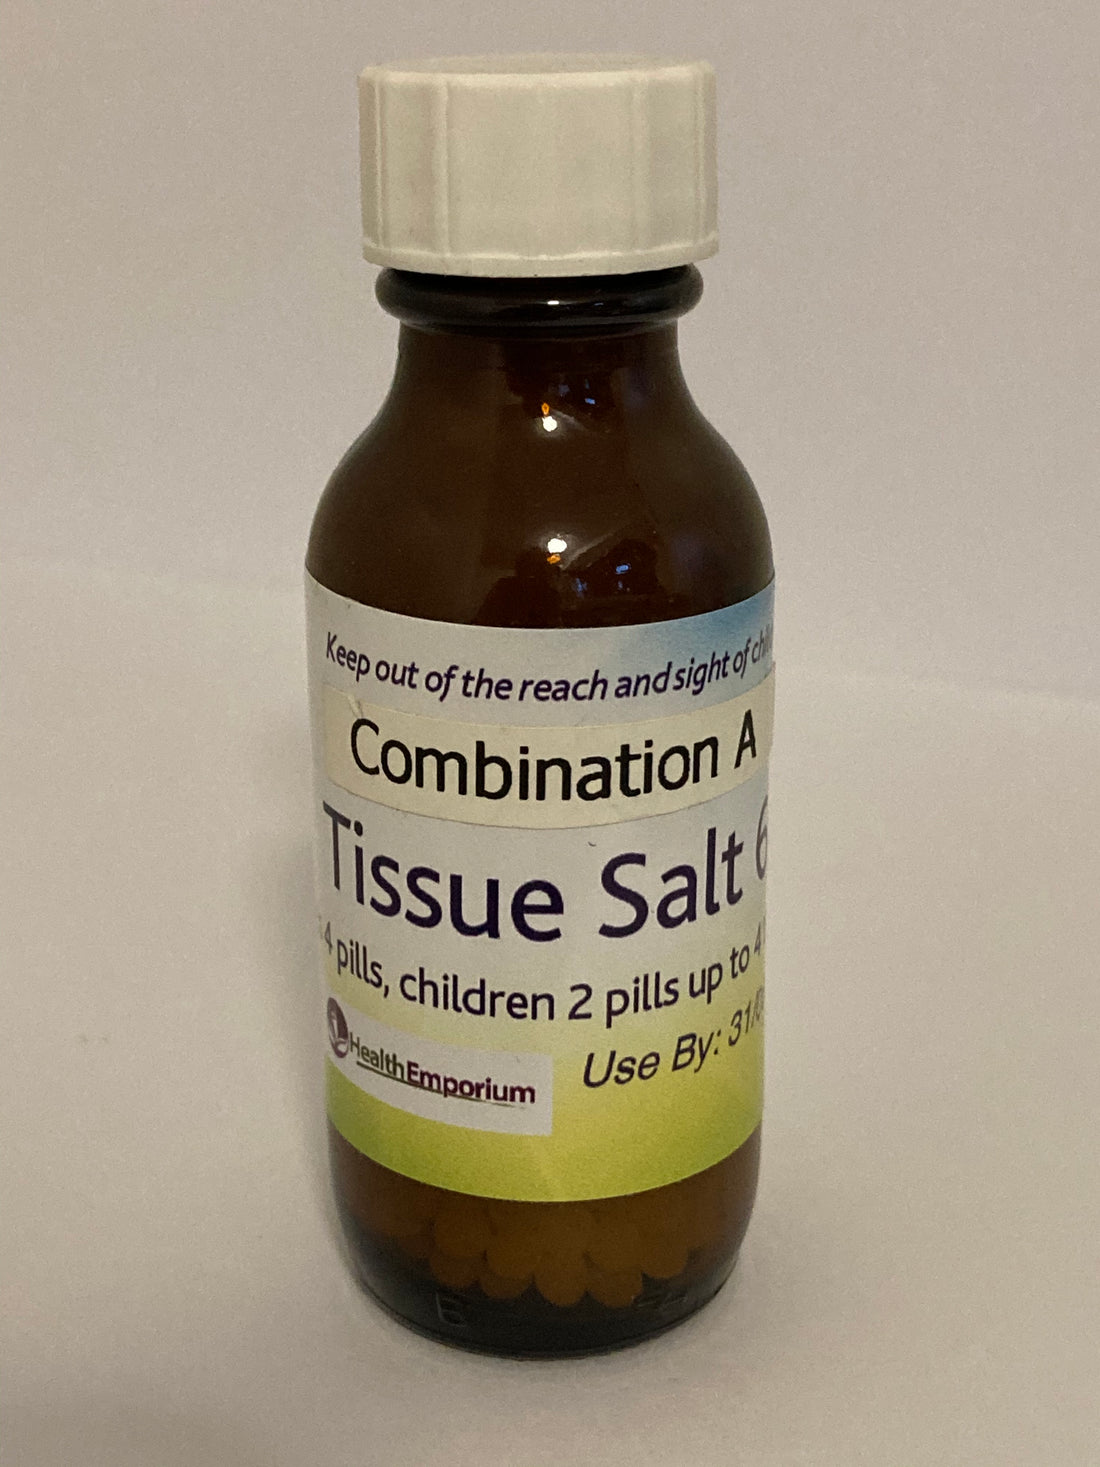 Combination A Tissue Salt Soft